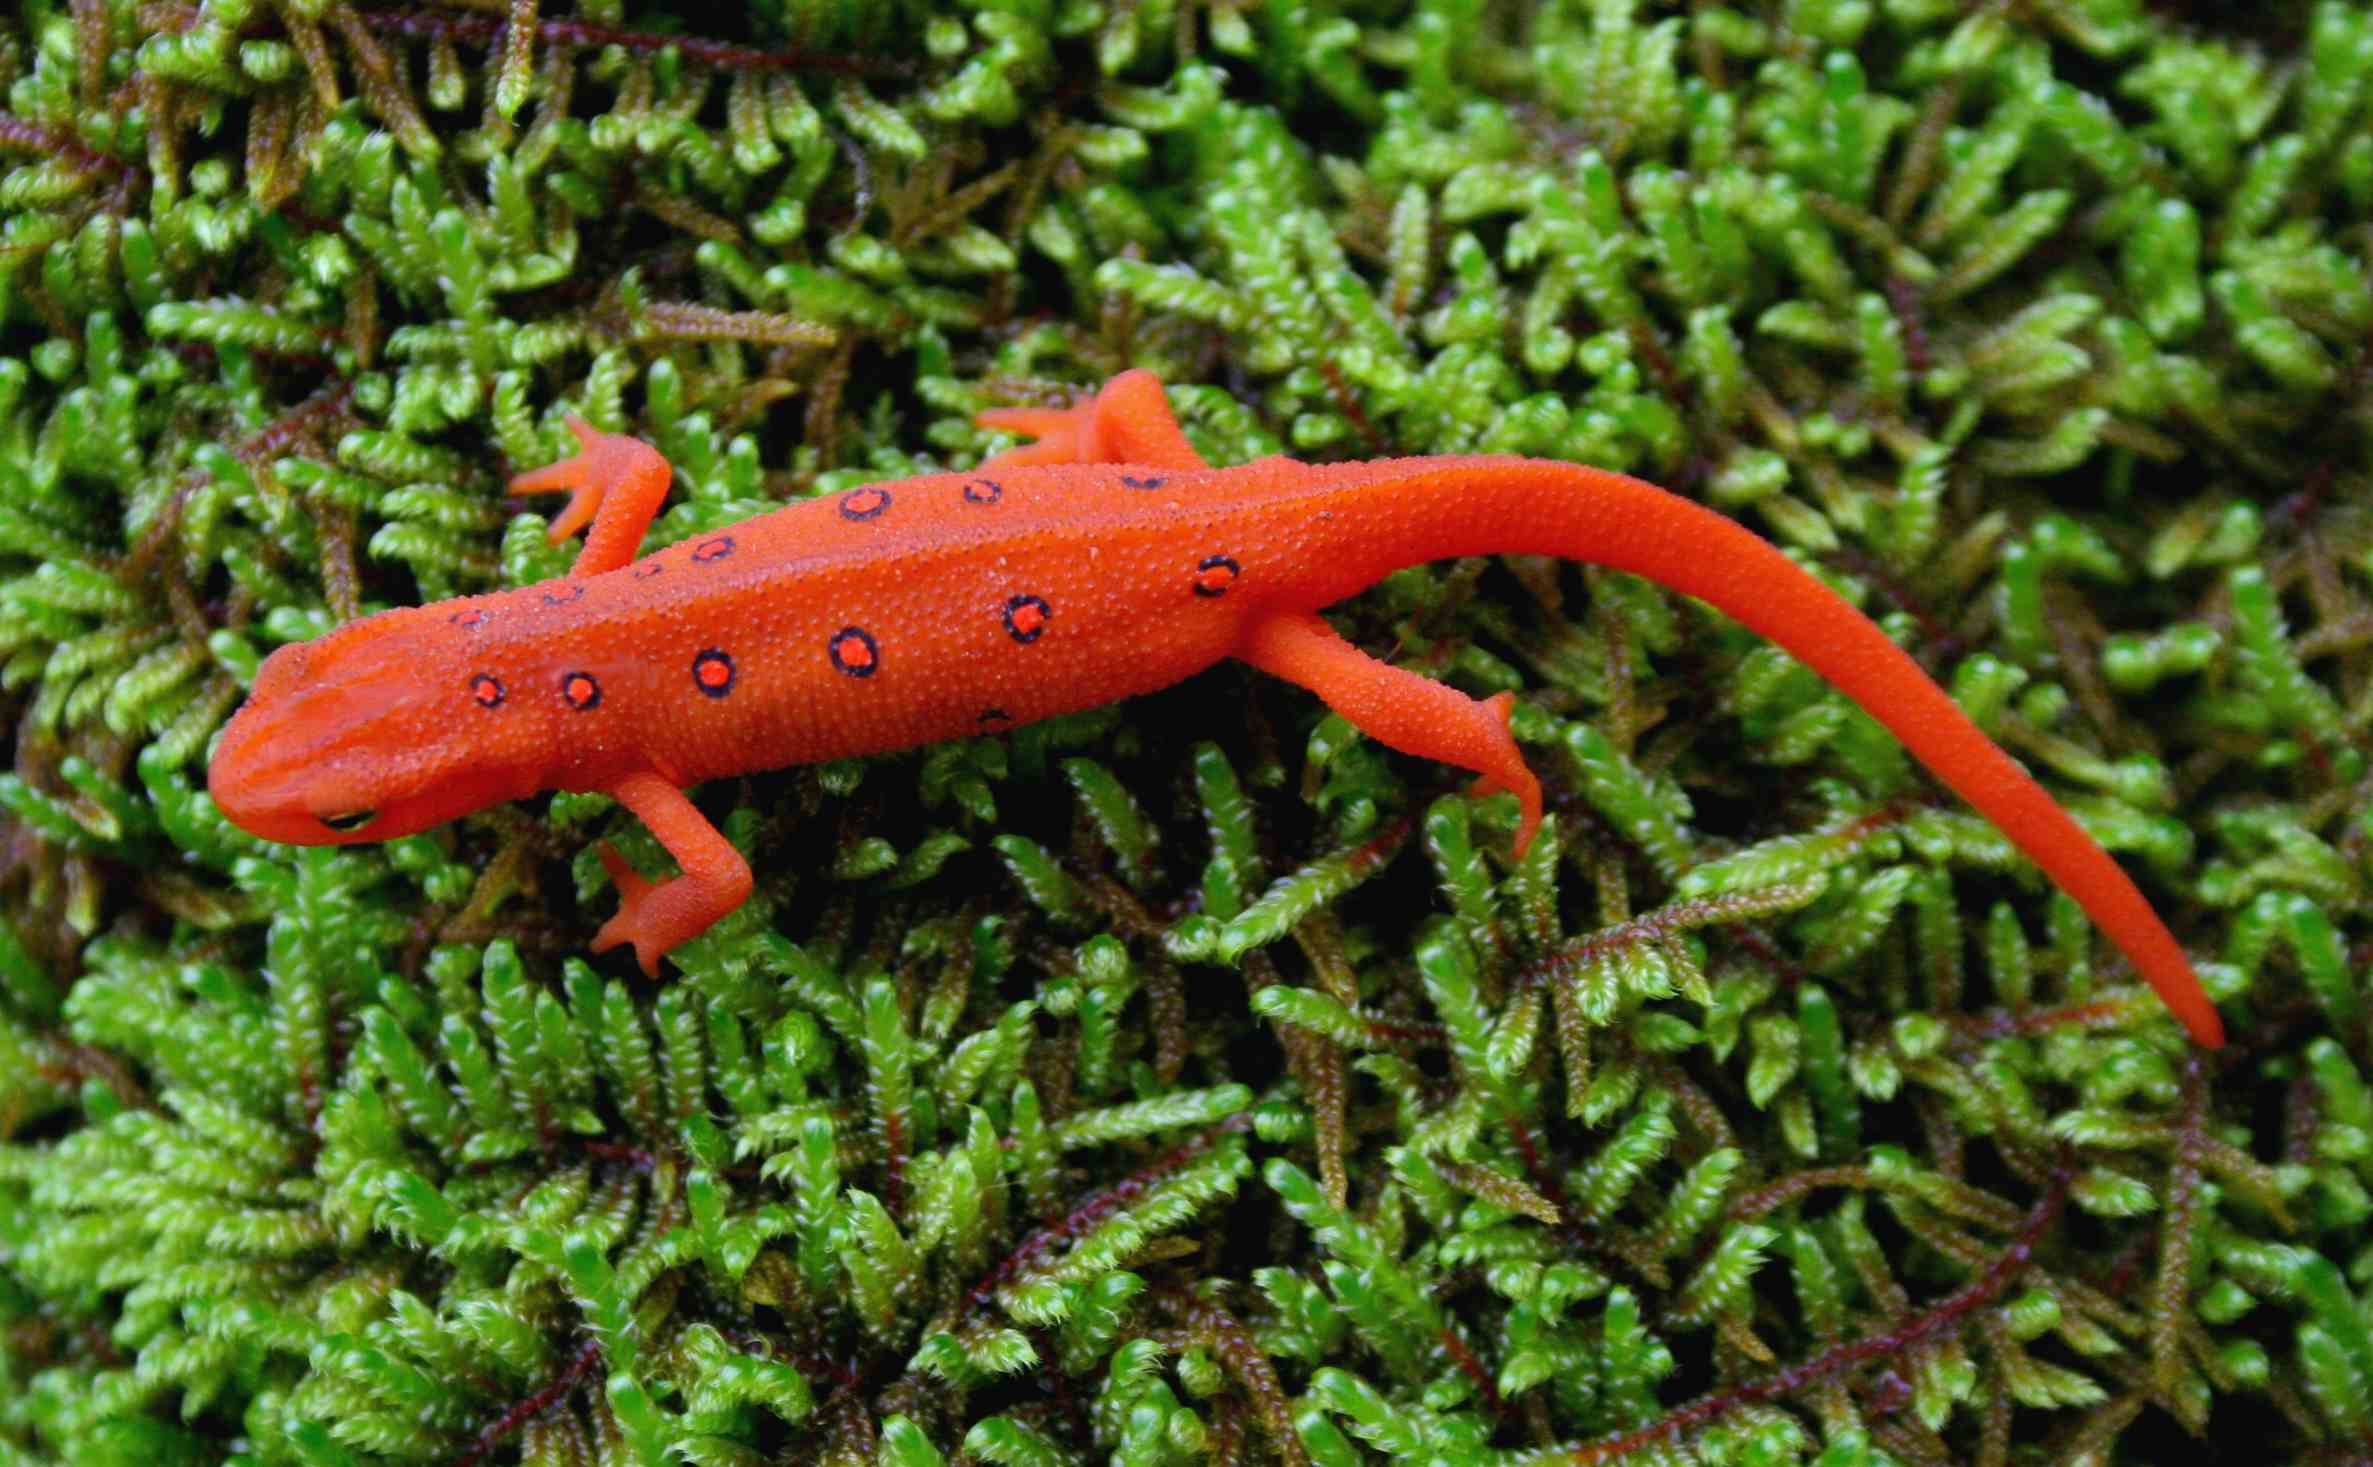 Orange Salamander on Mossy Stone tb0509brr.jpg